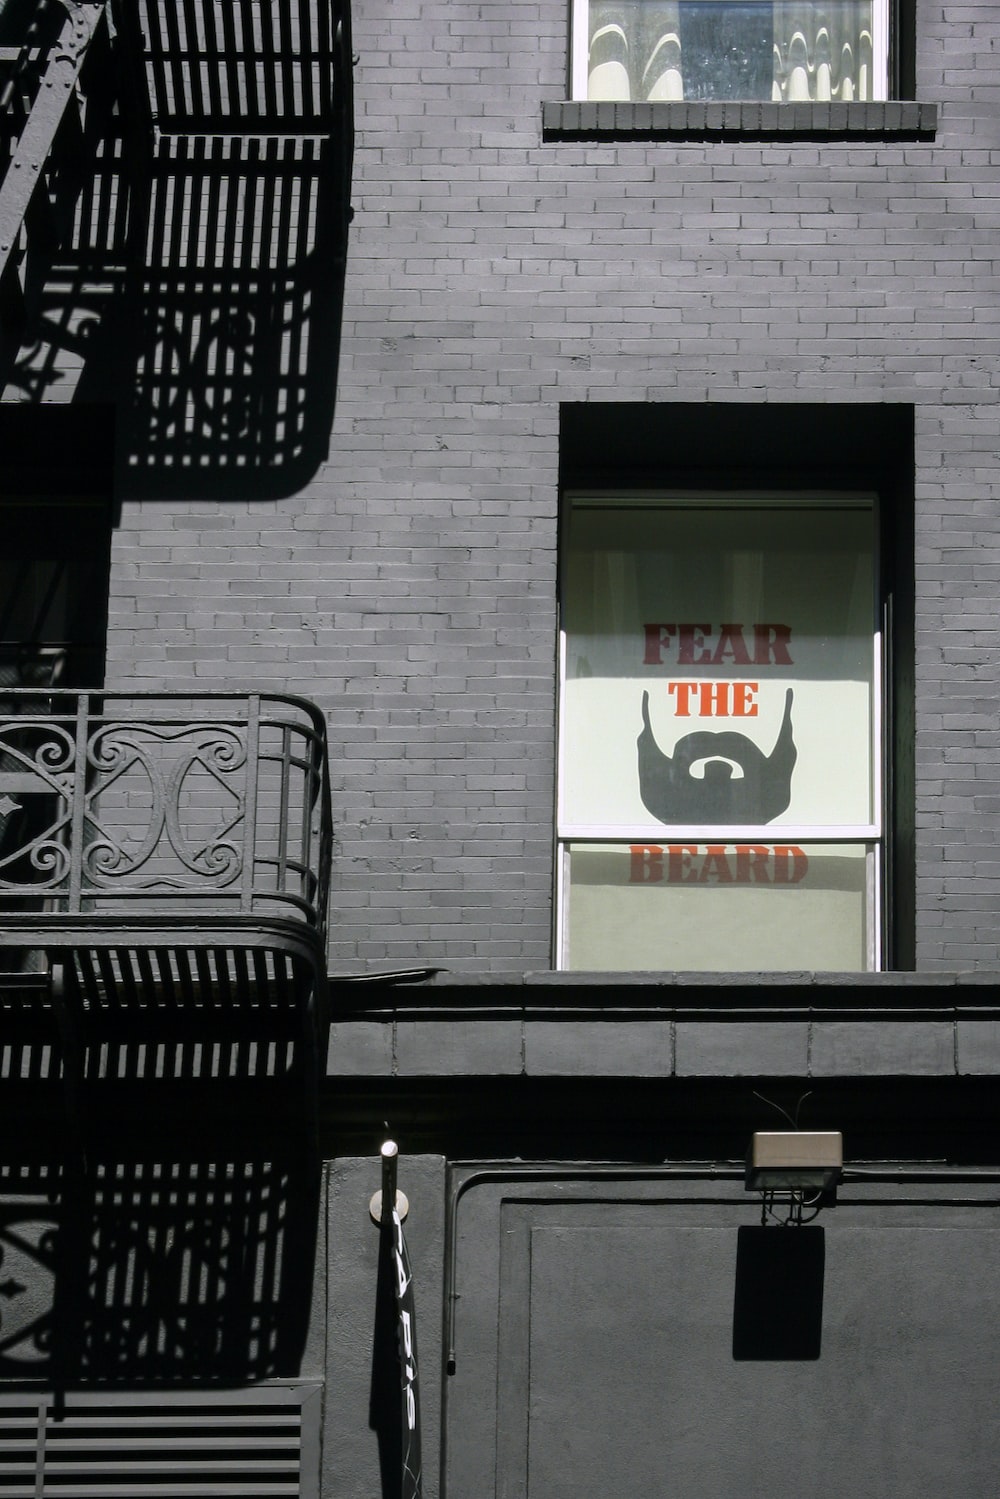 Fear The Beard signboard